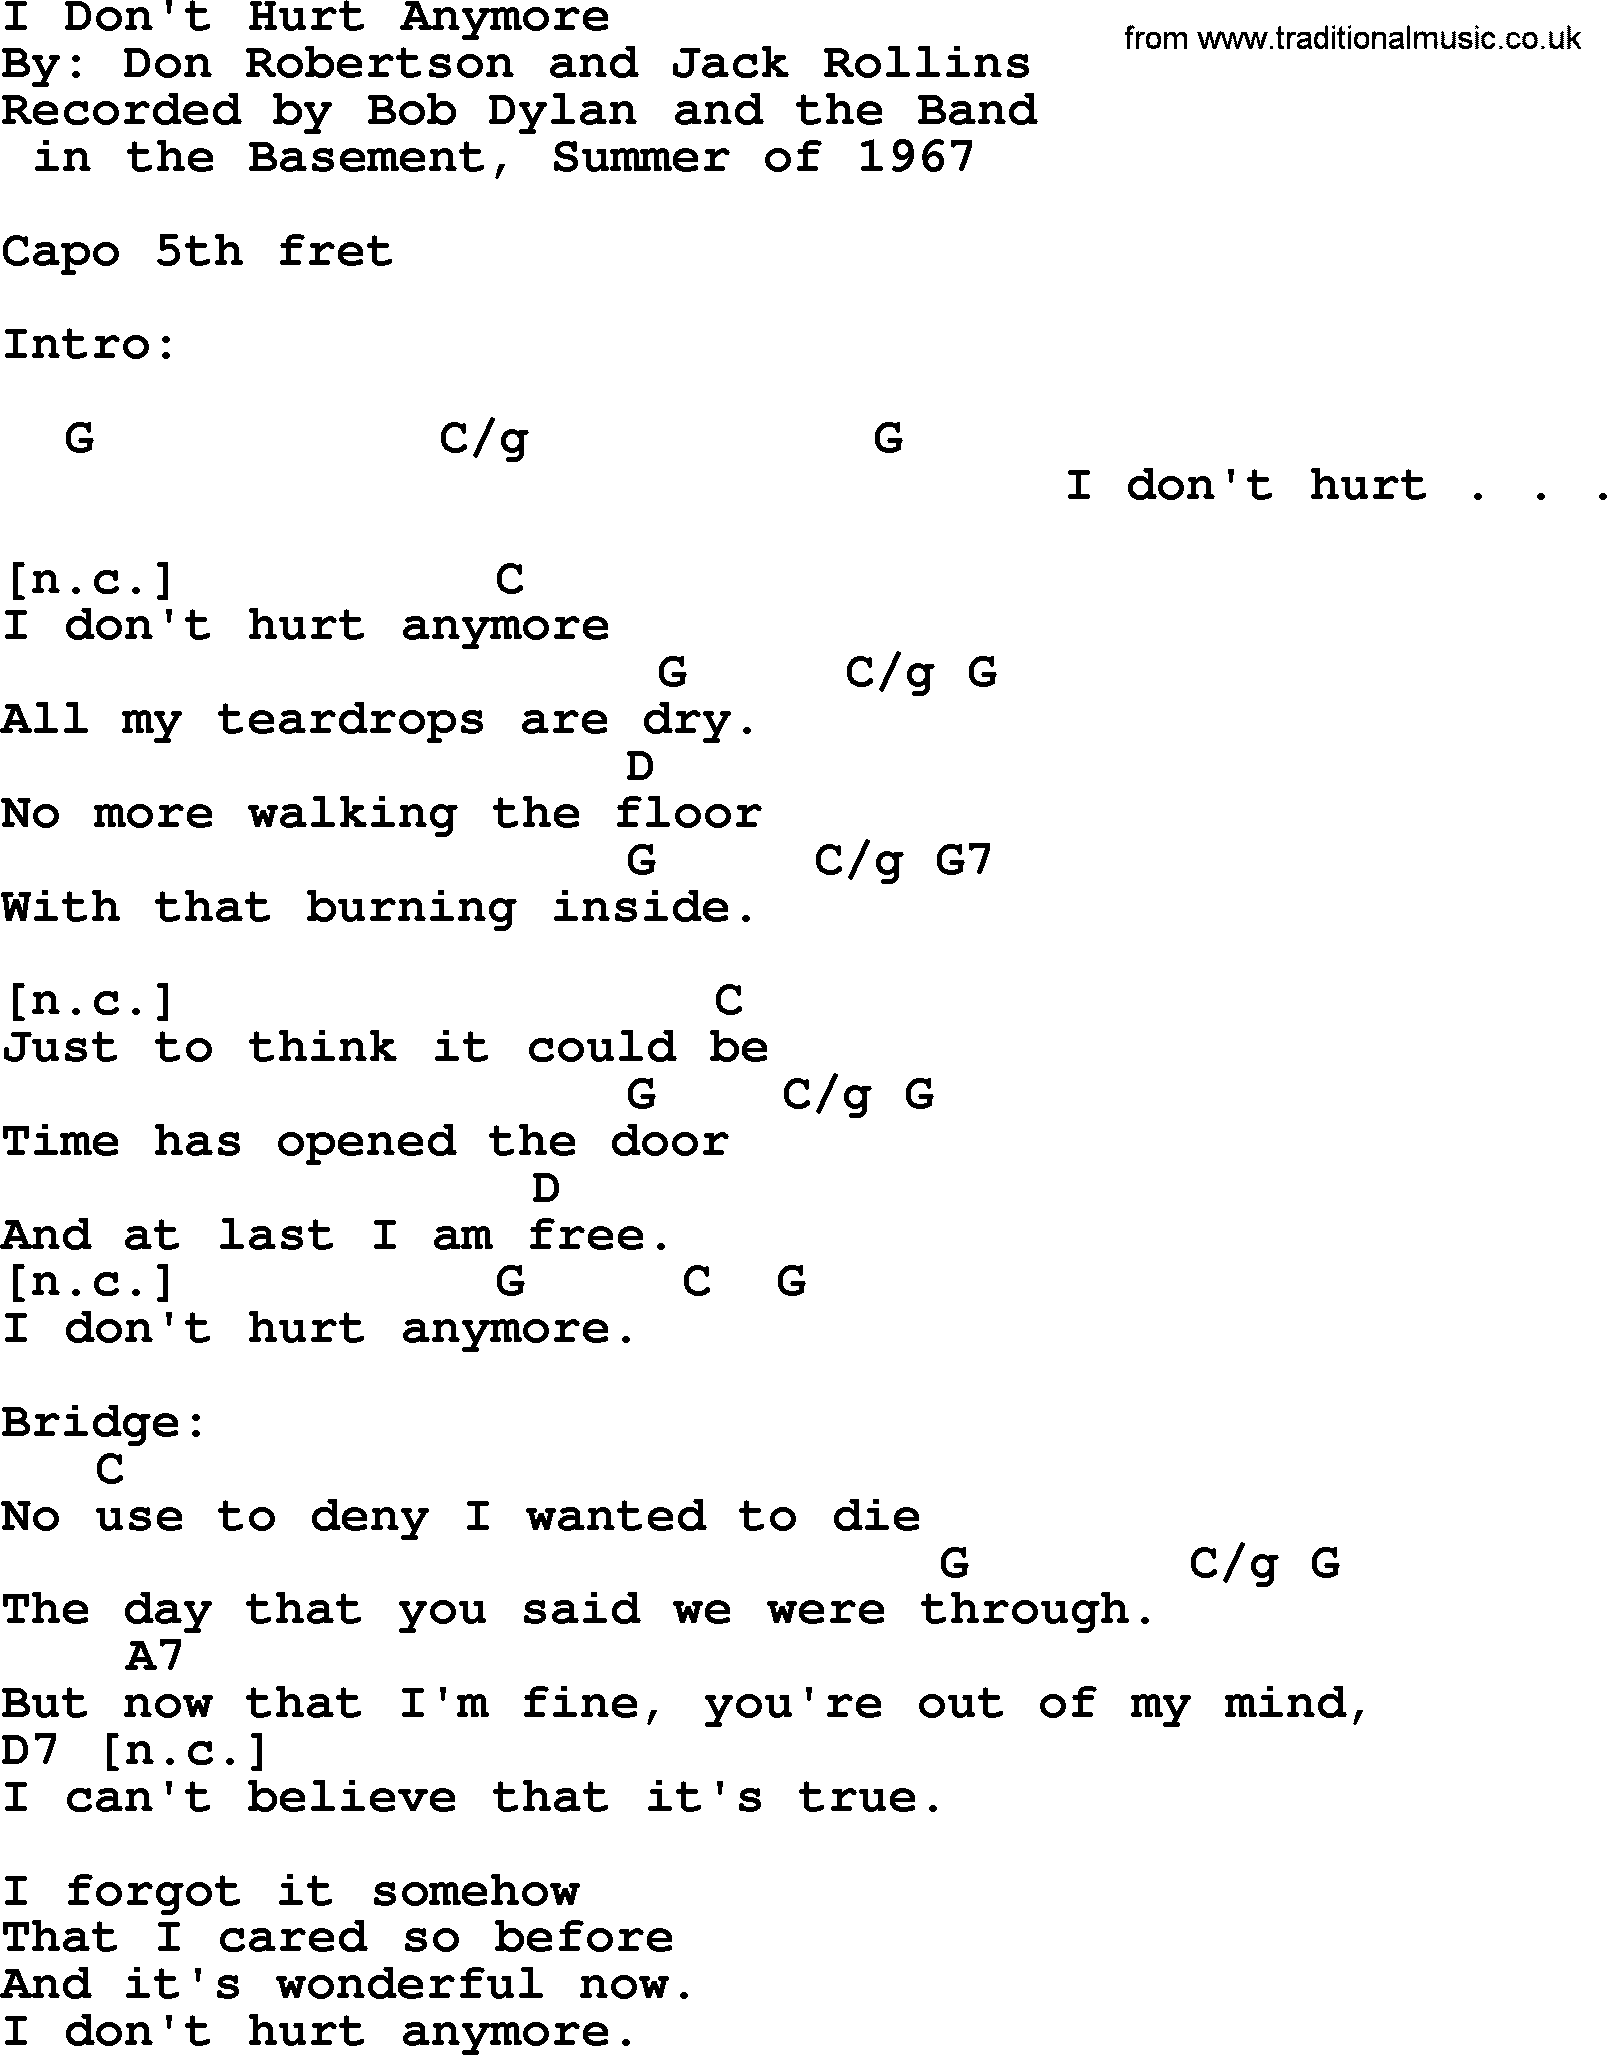 Bob Dylan song, lyrics with chords - I Don't Hurt Anymore